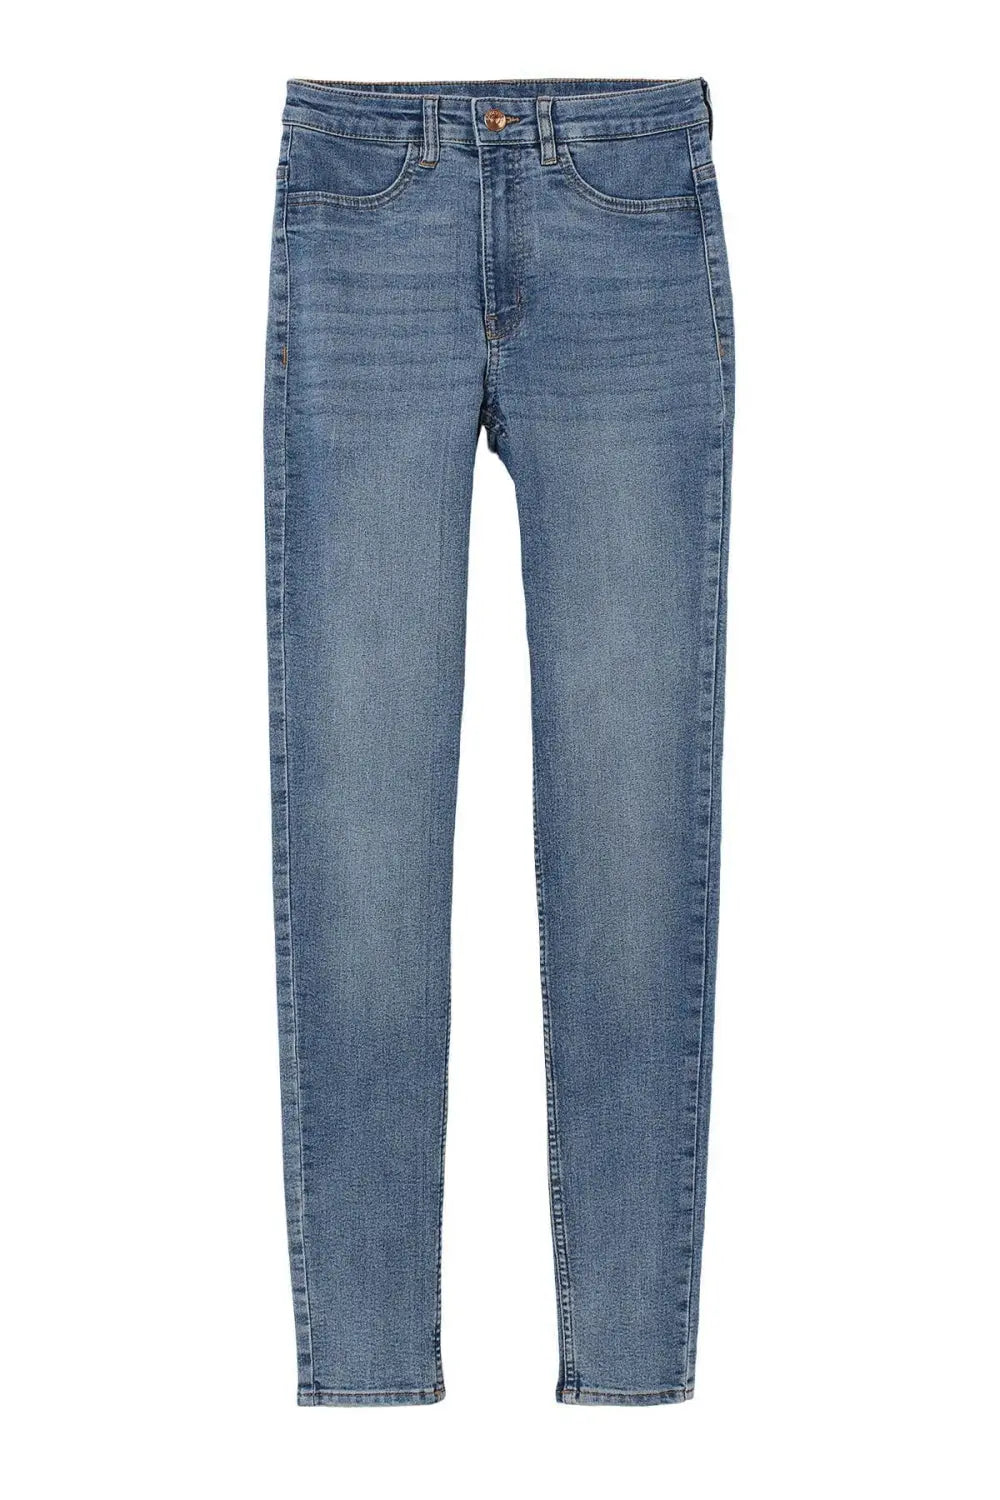 H&M Super Skinny Jeans